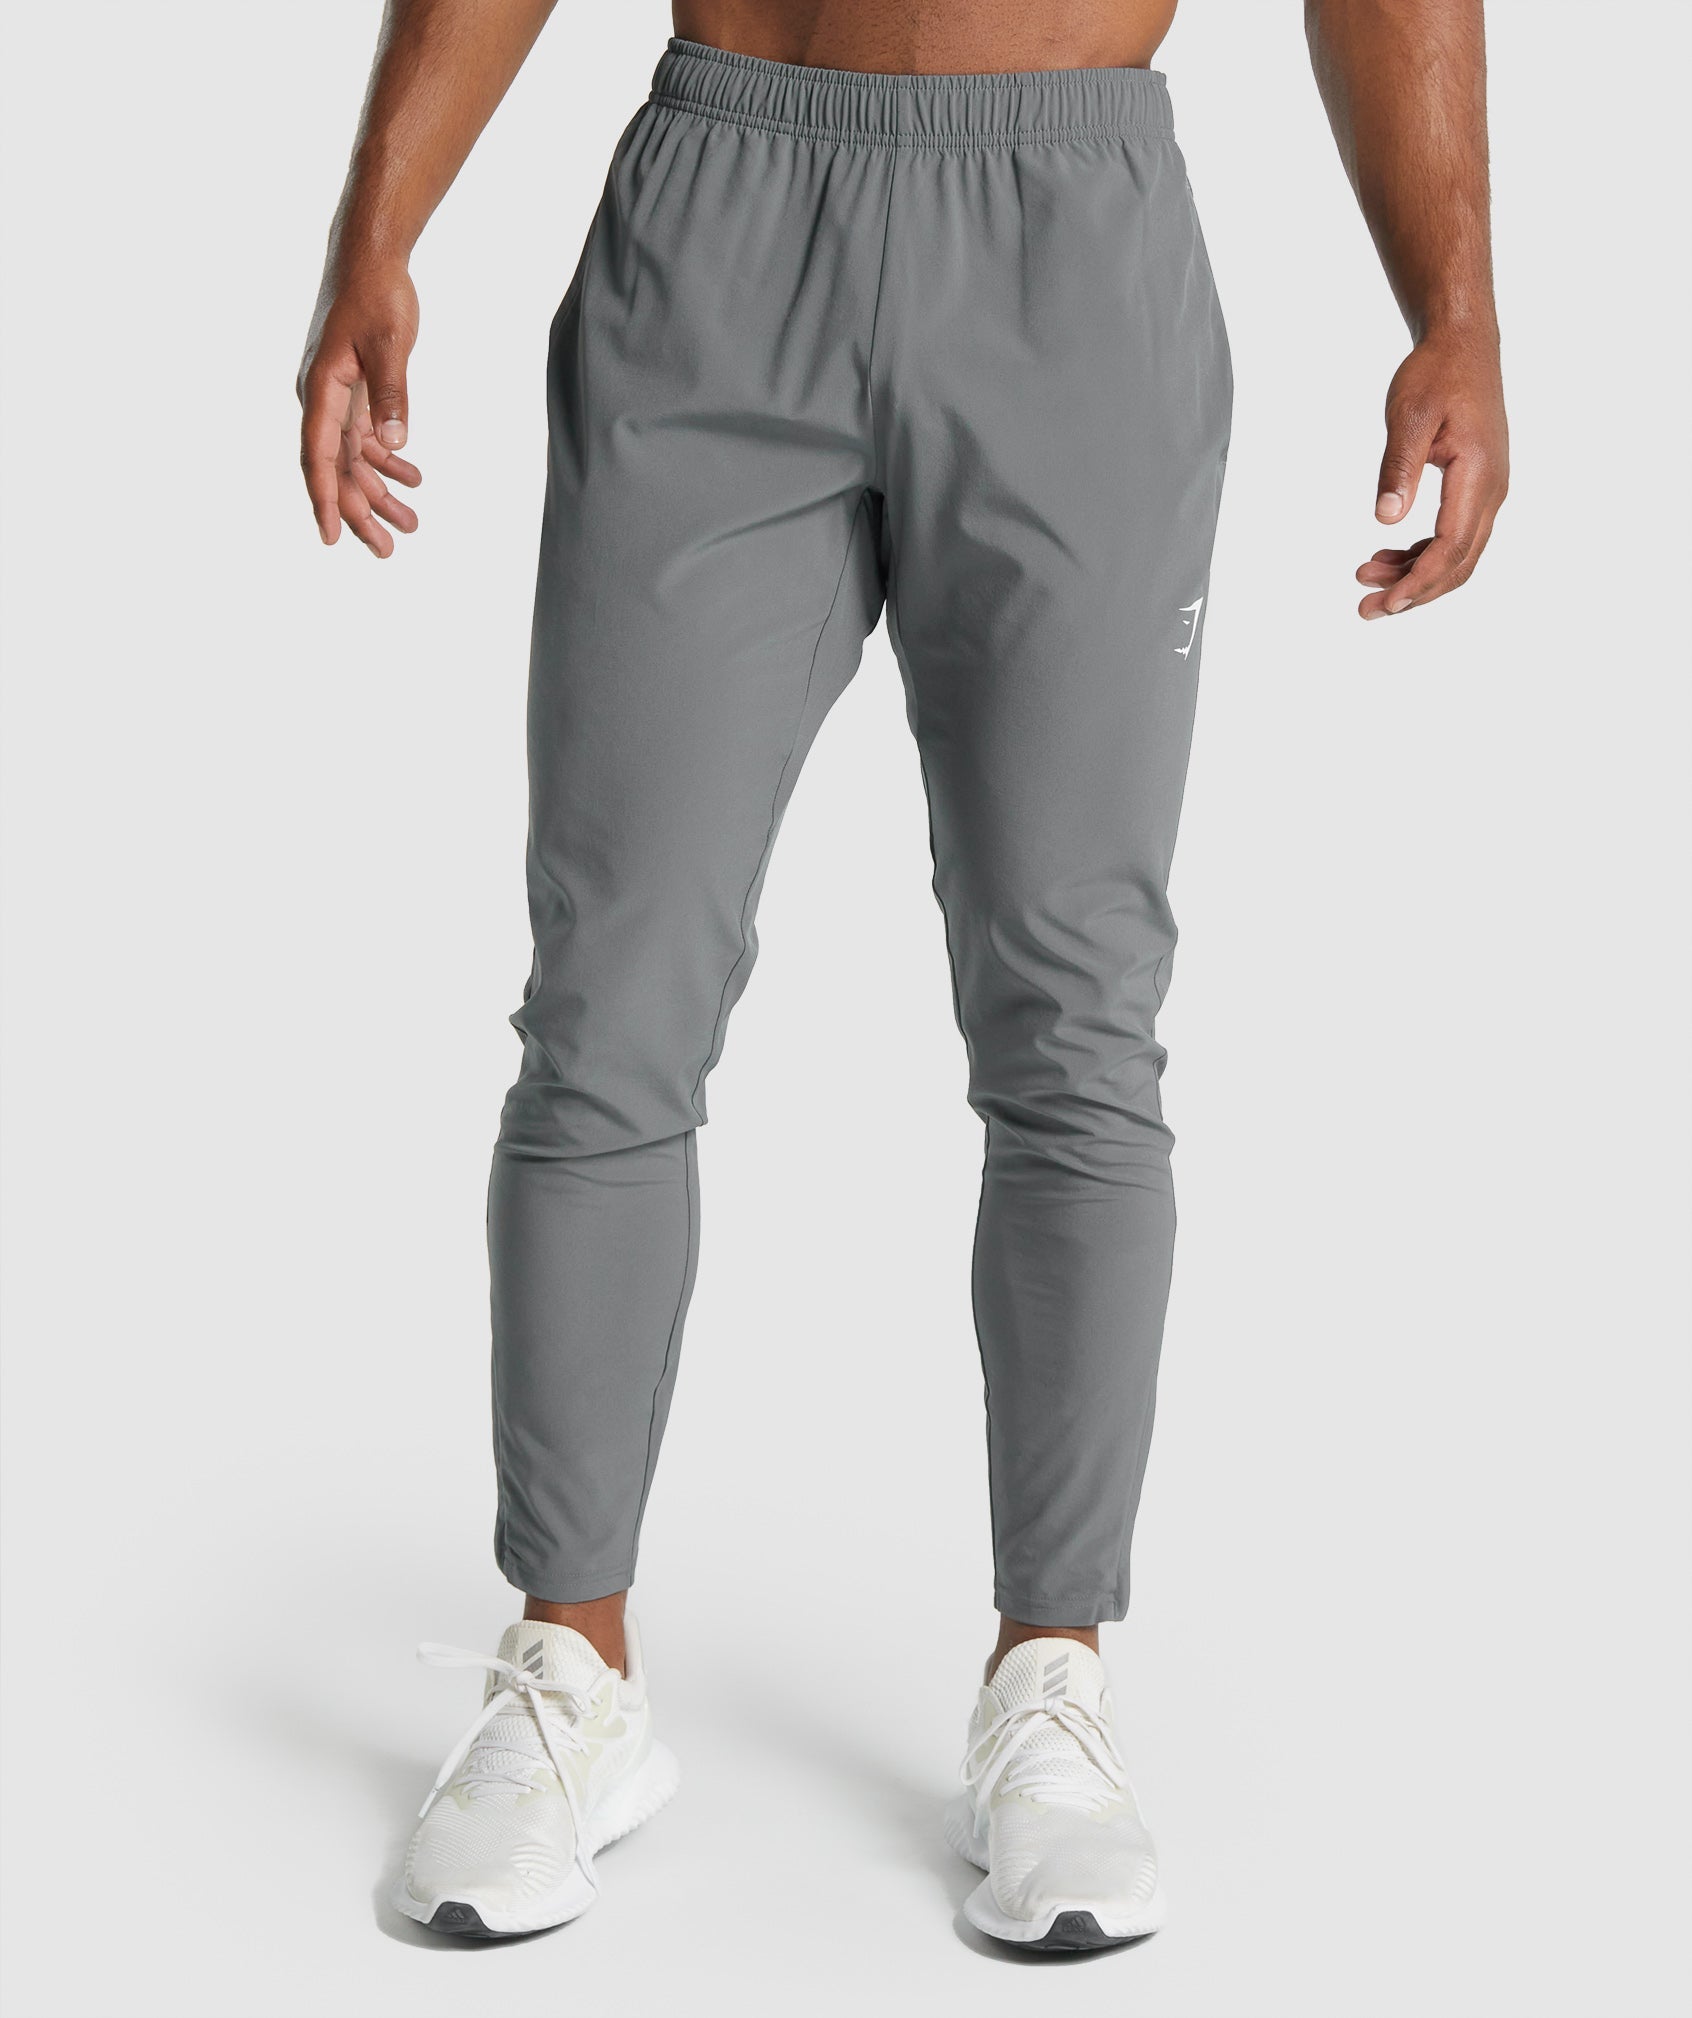 Gymshark Crest Joggers - Core Olive  Mens bottom, Fitness models, Joggers